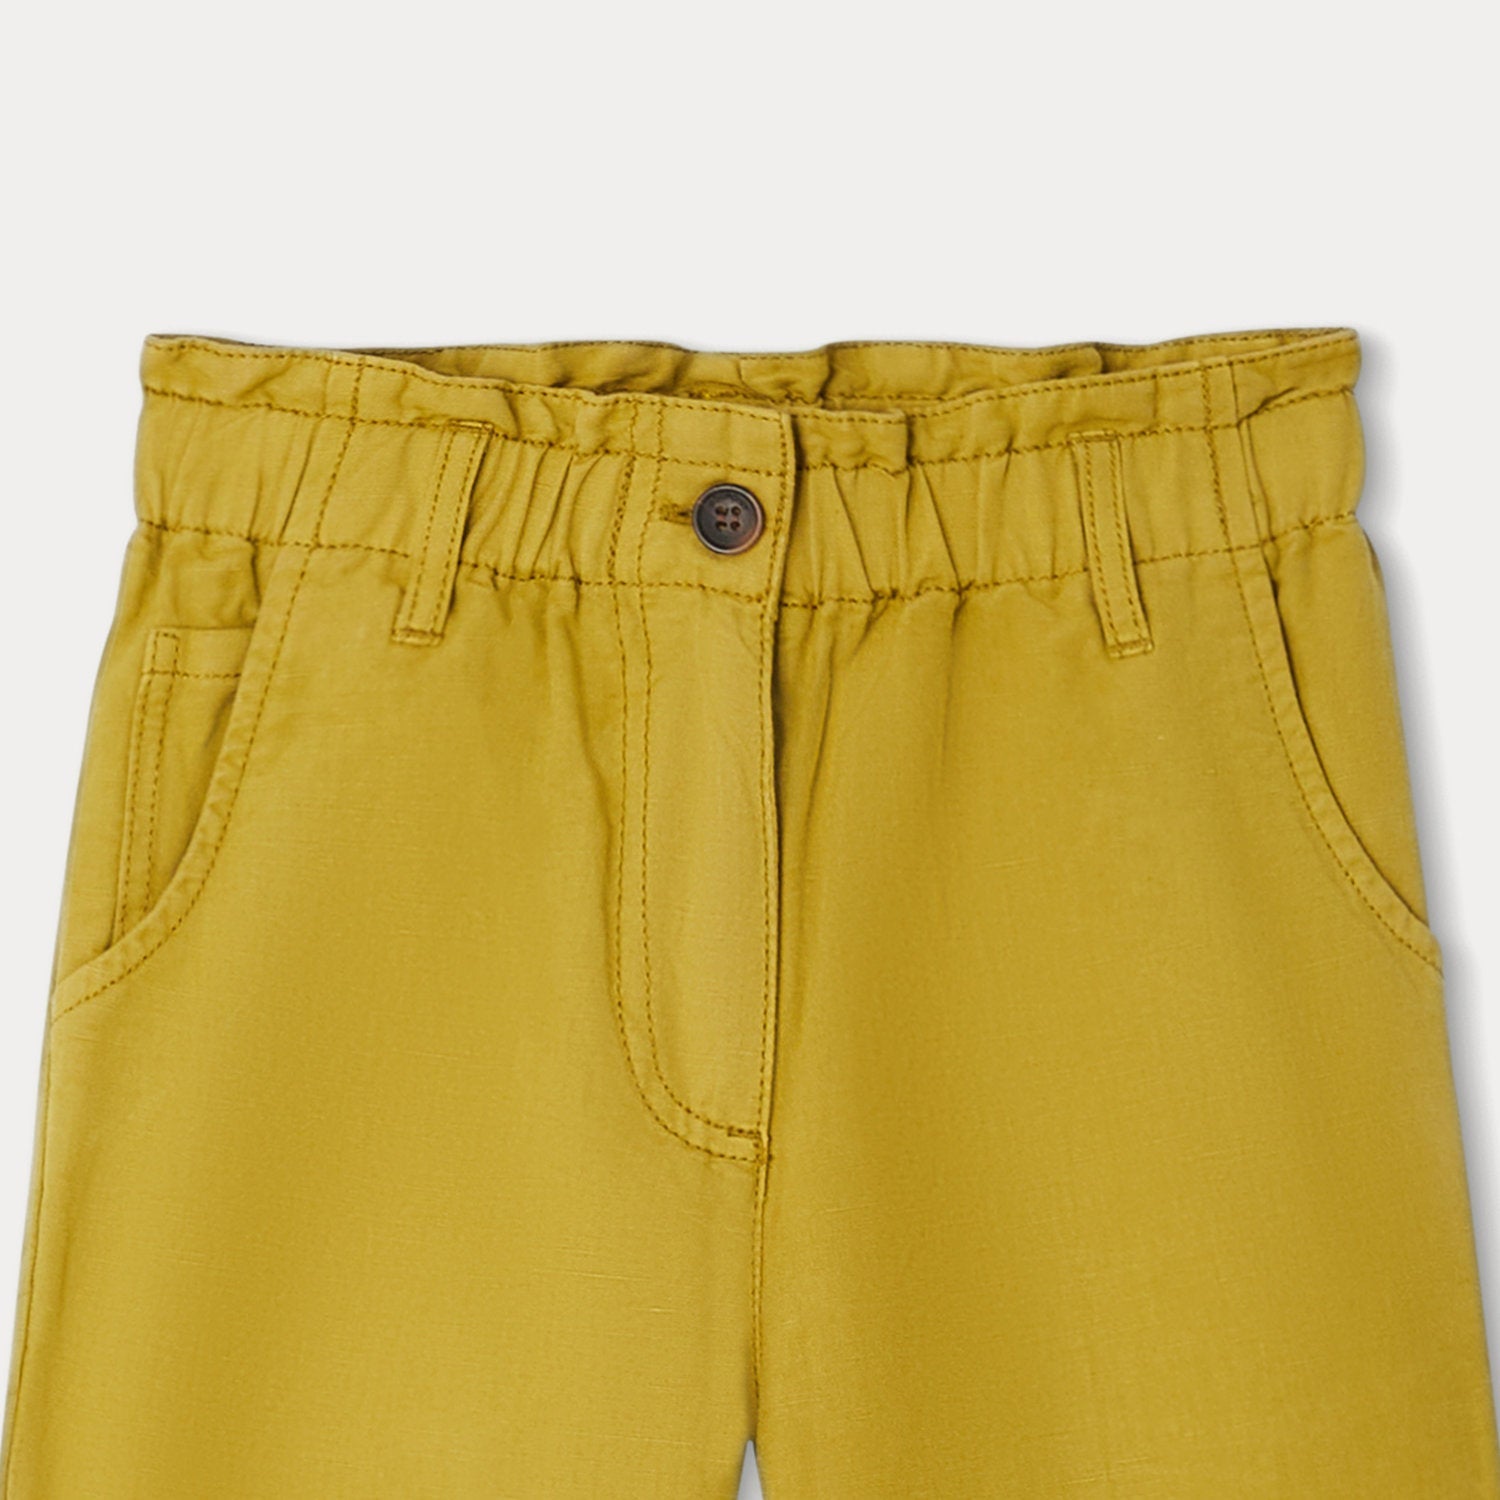 Girls Yellow Trousers